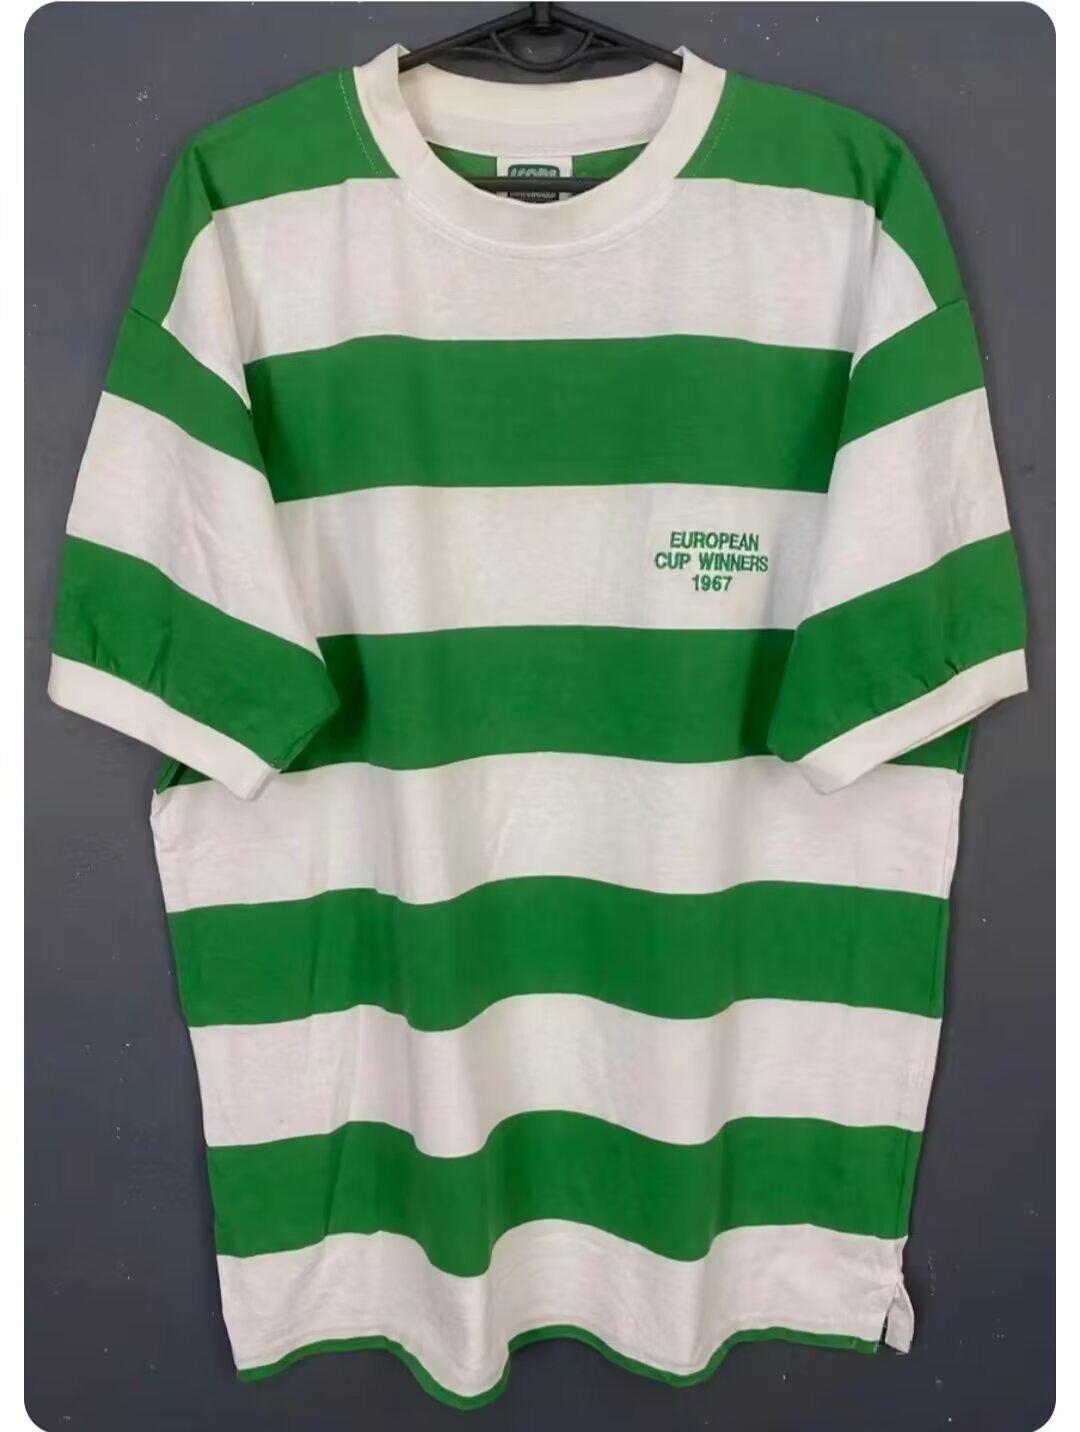 Celtic Glasgow retro soccer jersey 1966-1967